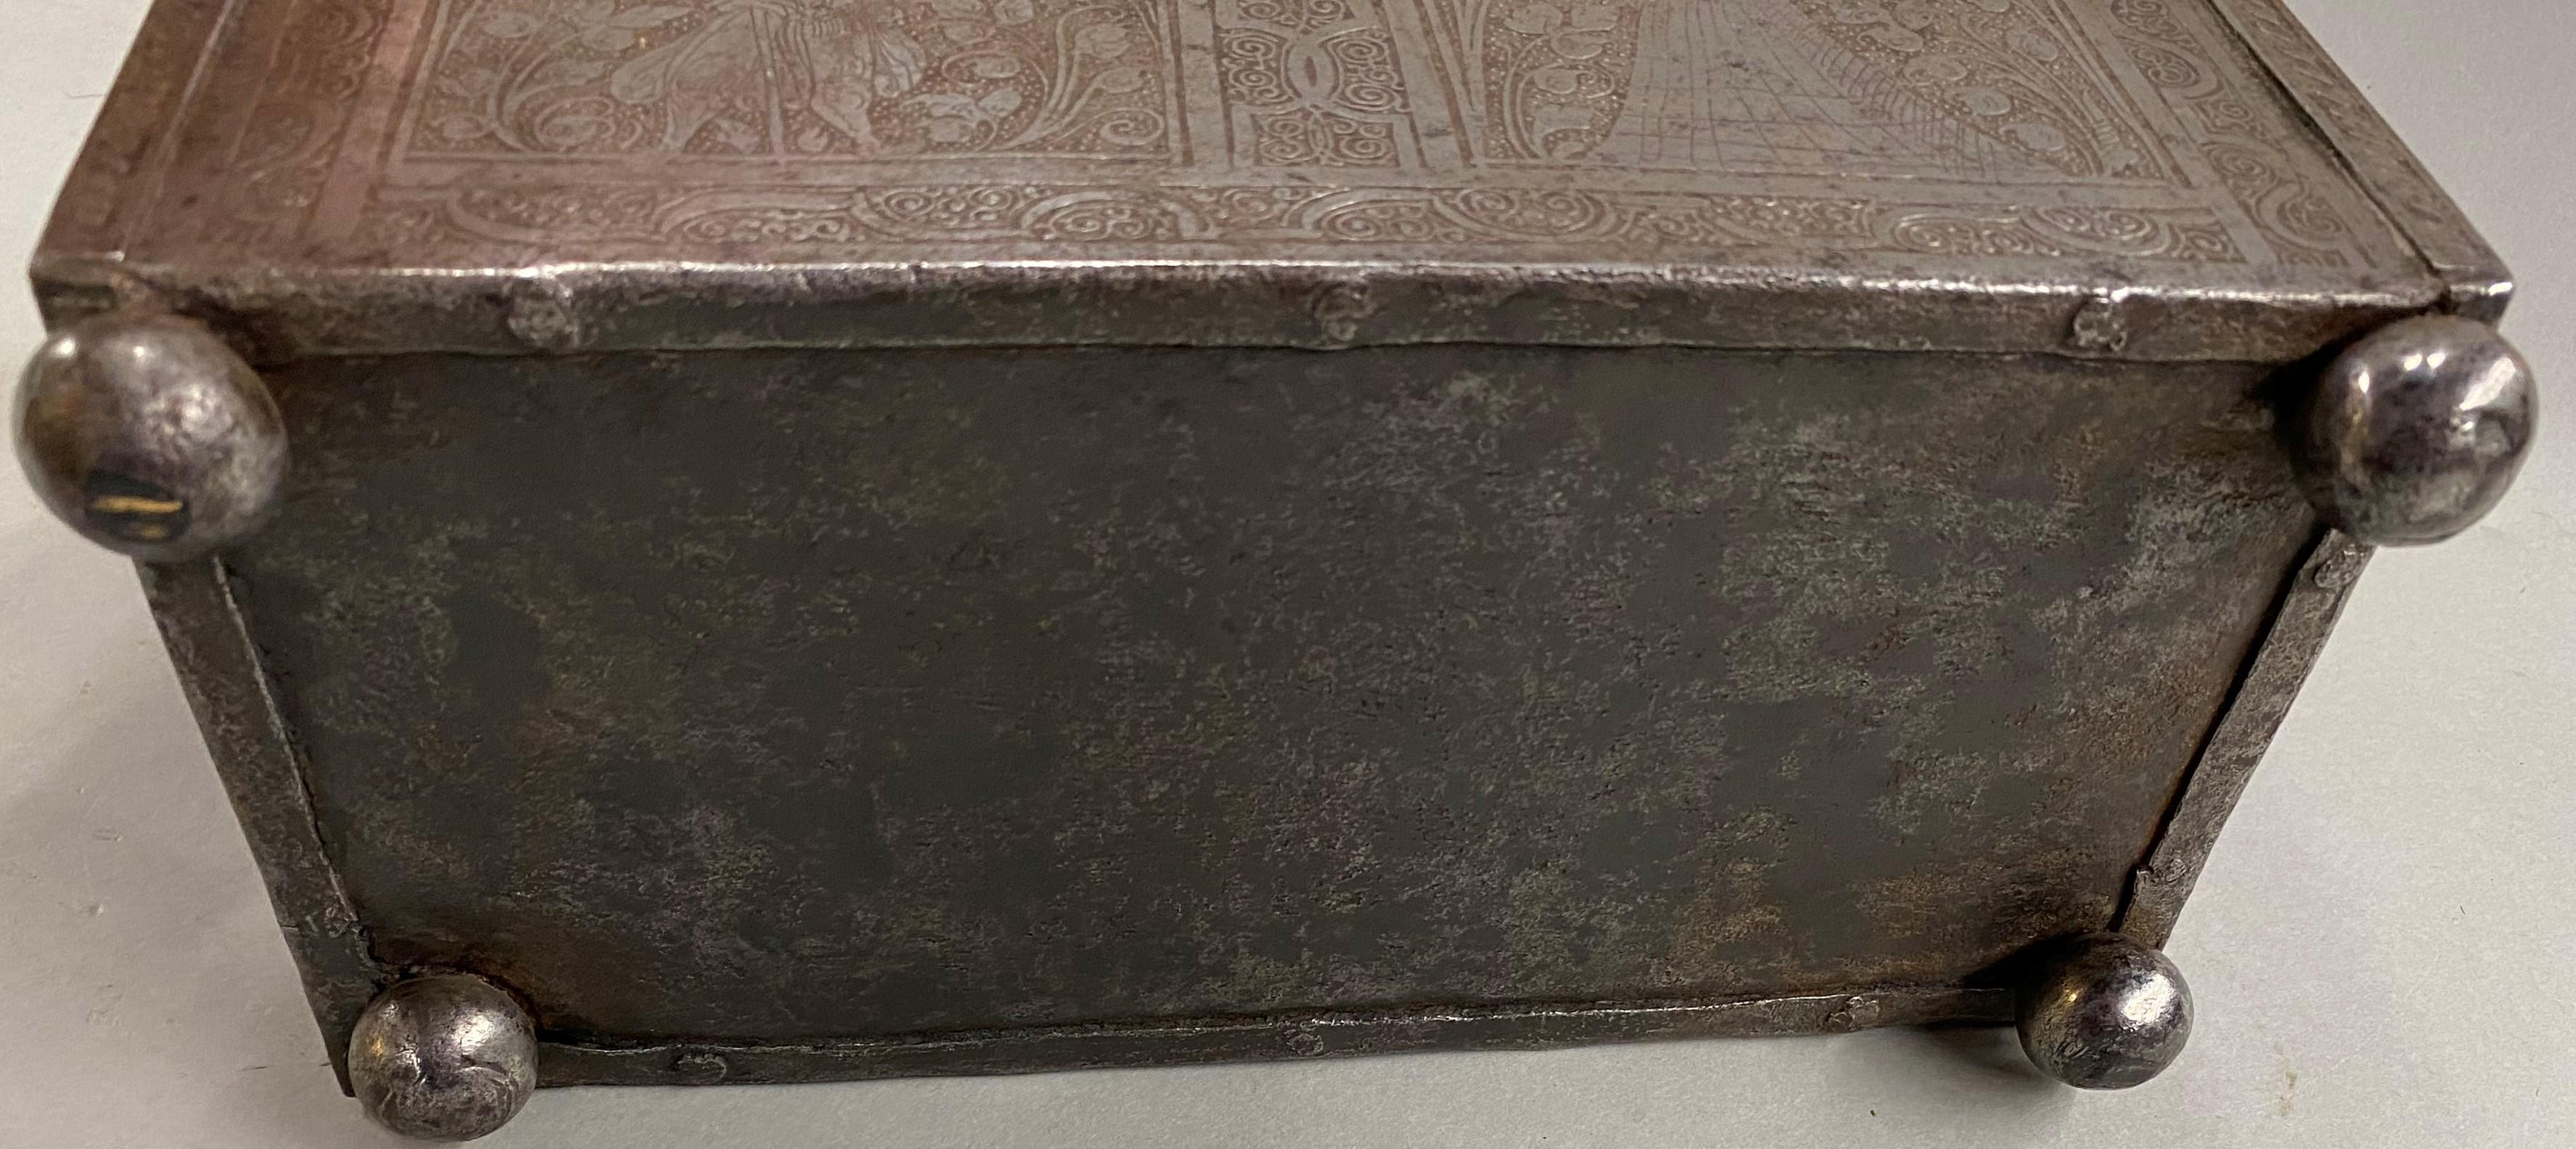 Steel Engraved Nuremberg Money Chest or Cash Box circa 1600 For Sale 9